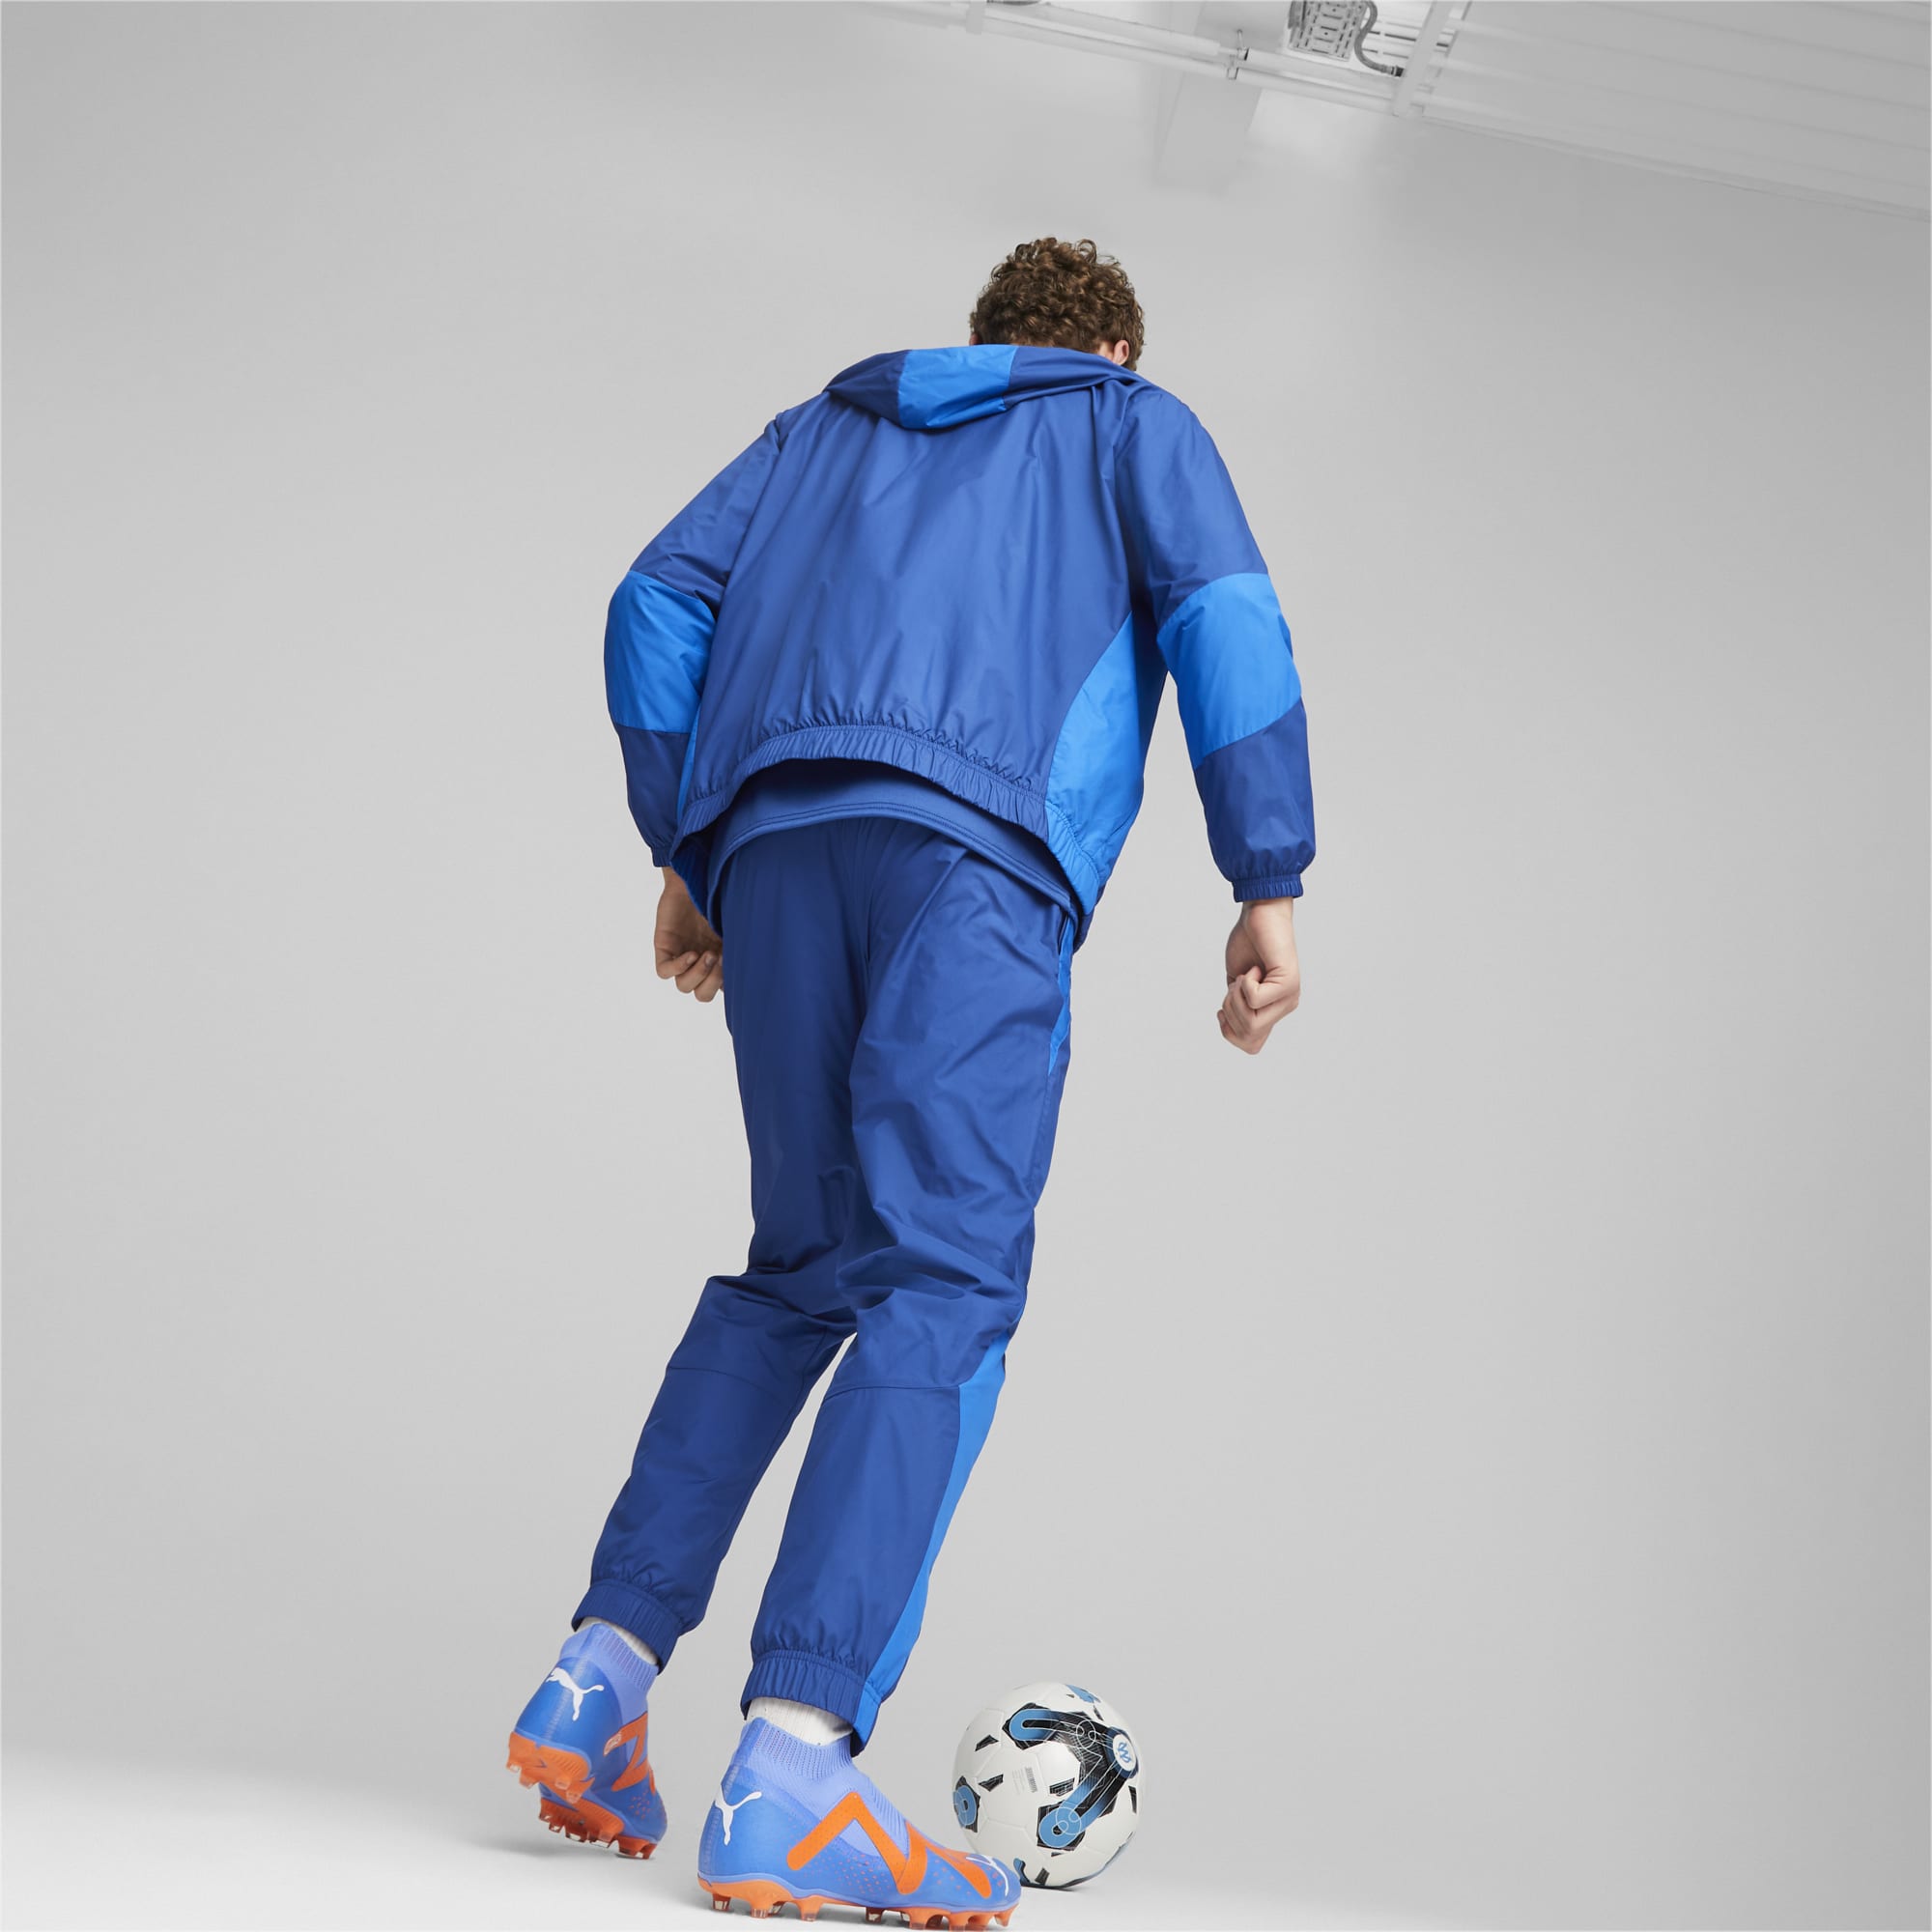 Men's PUMA Olympique De Marseille Prematch Football Jacket, Royal Blue, Size XS, Clothing